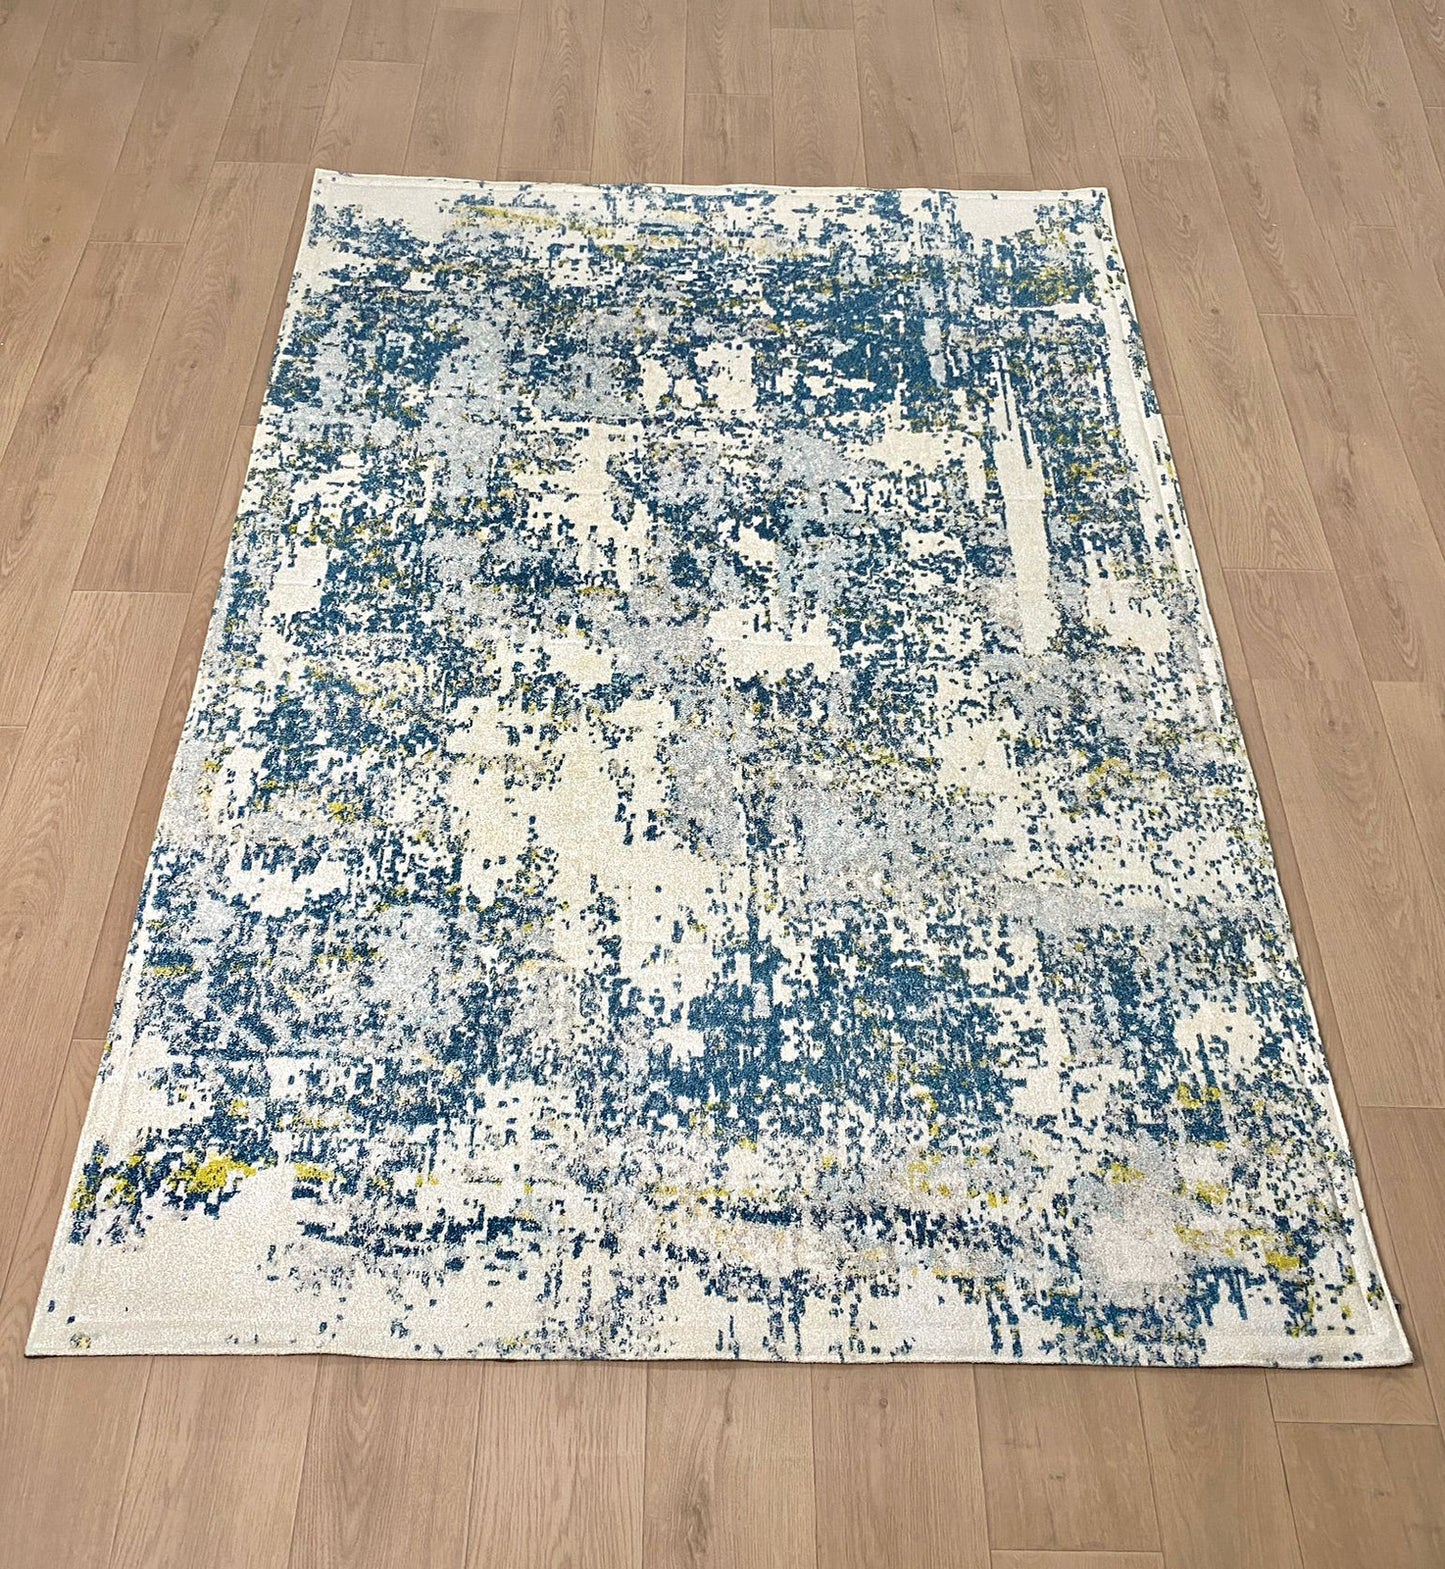 Karpet Abstrak (BU-A-0006) - Blue,Grey